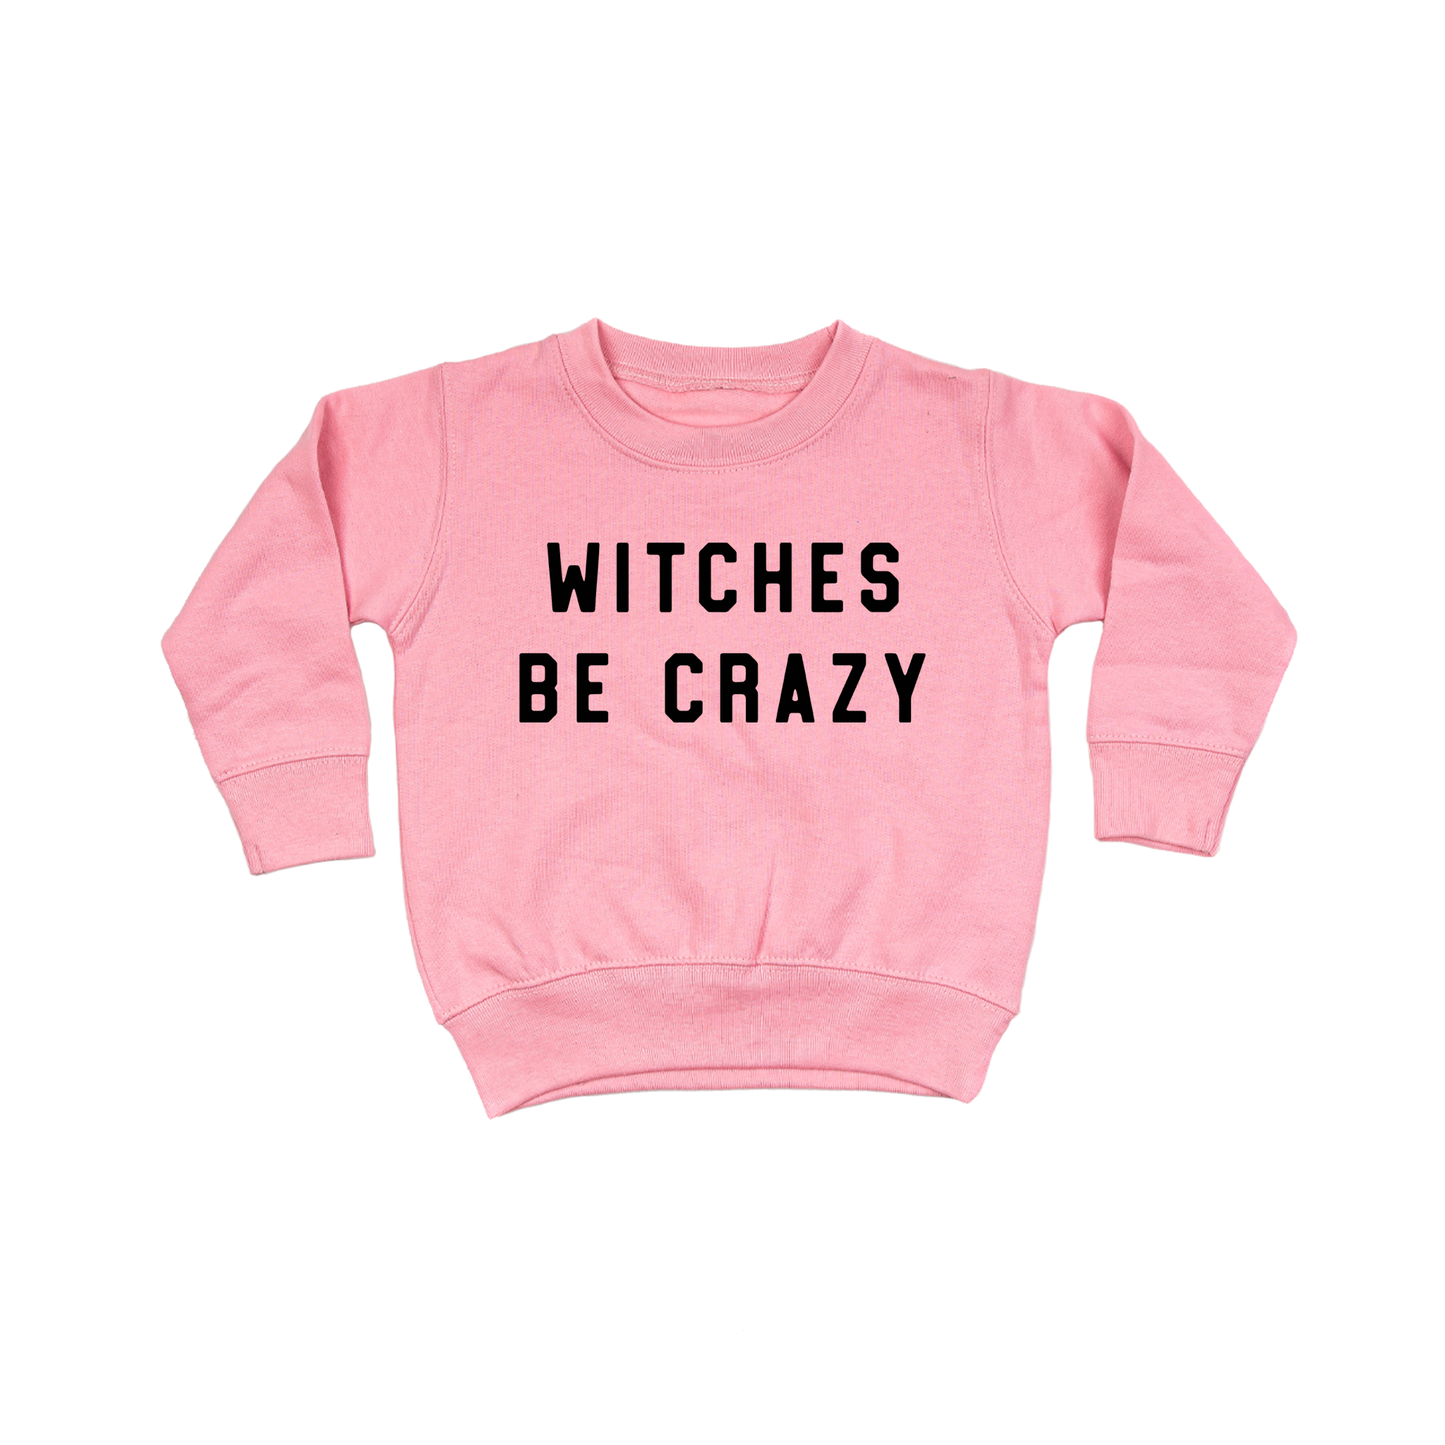 Witches Be Crazy (Black) - Kids Sweatshirt (Pink)